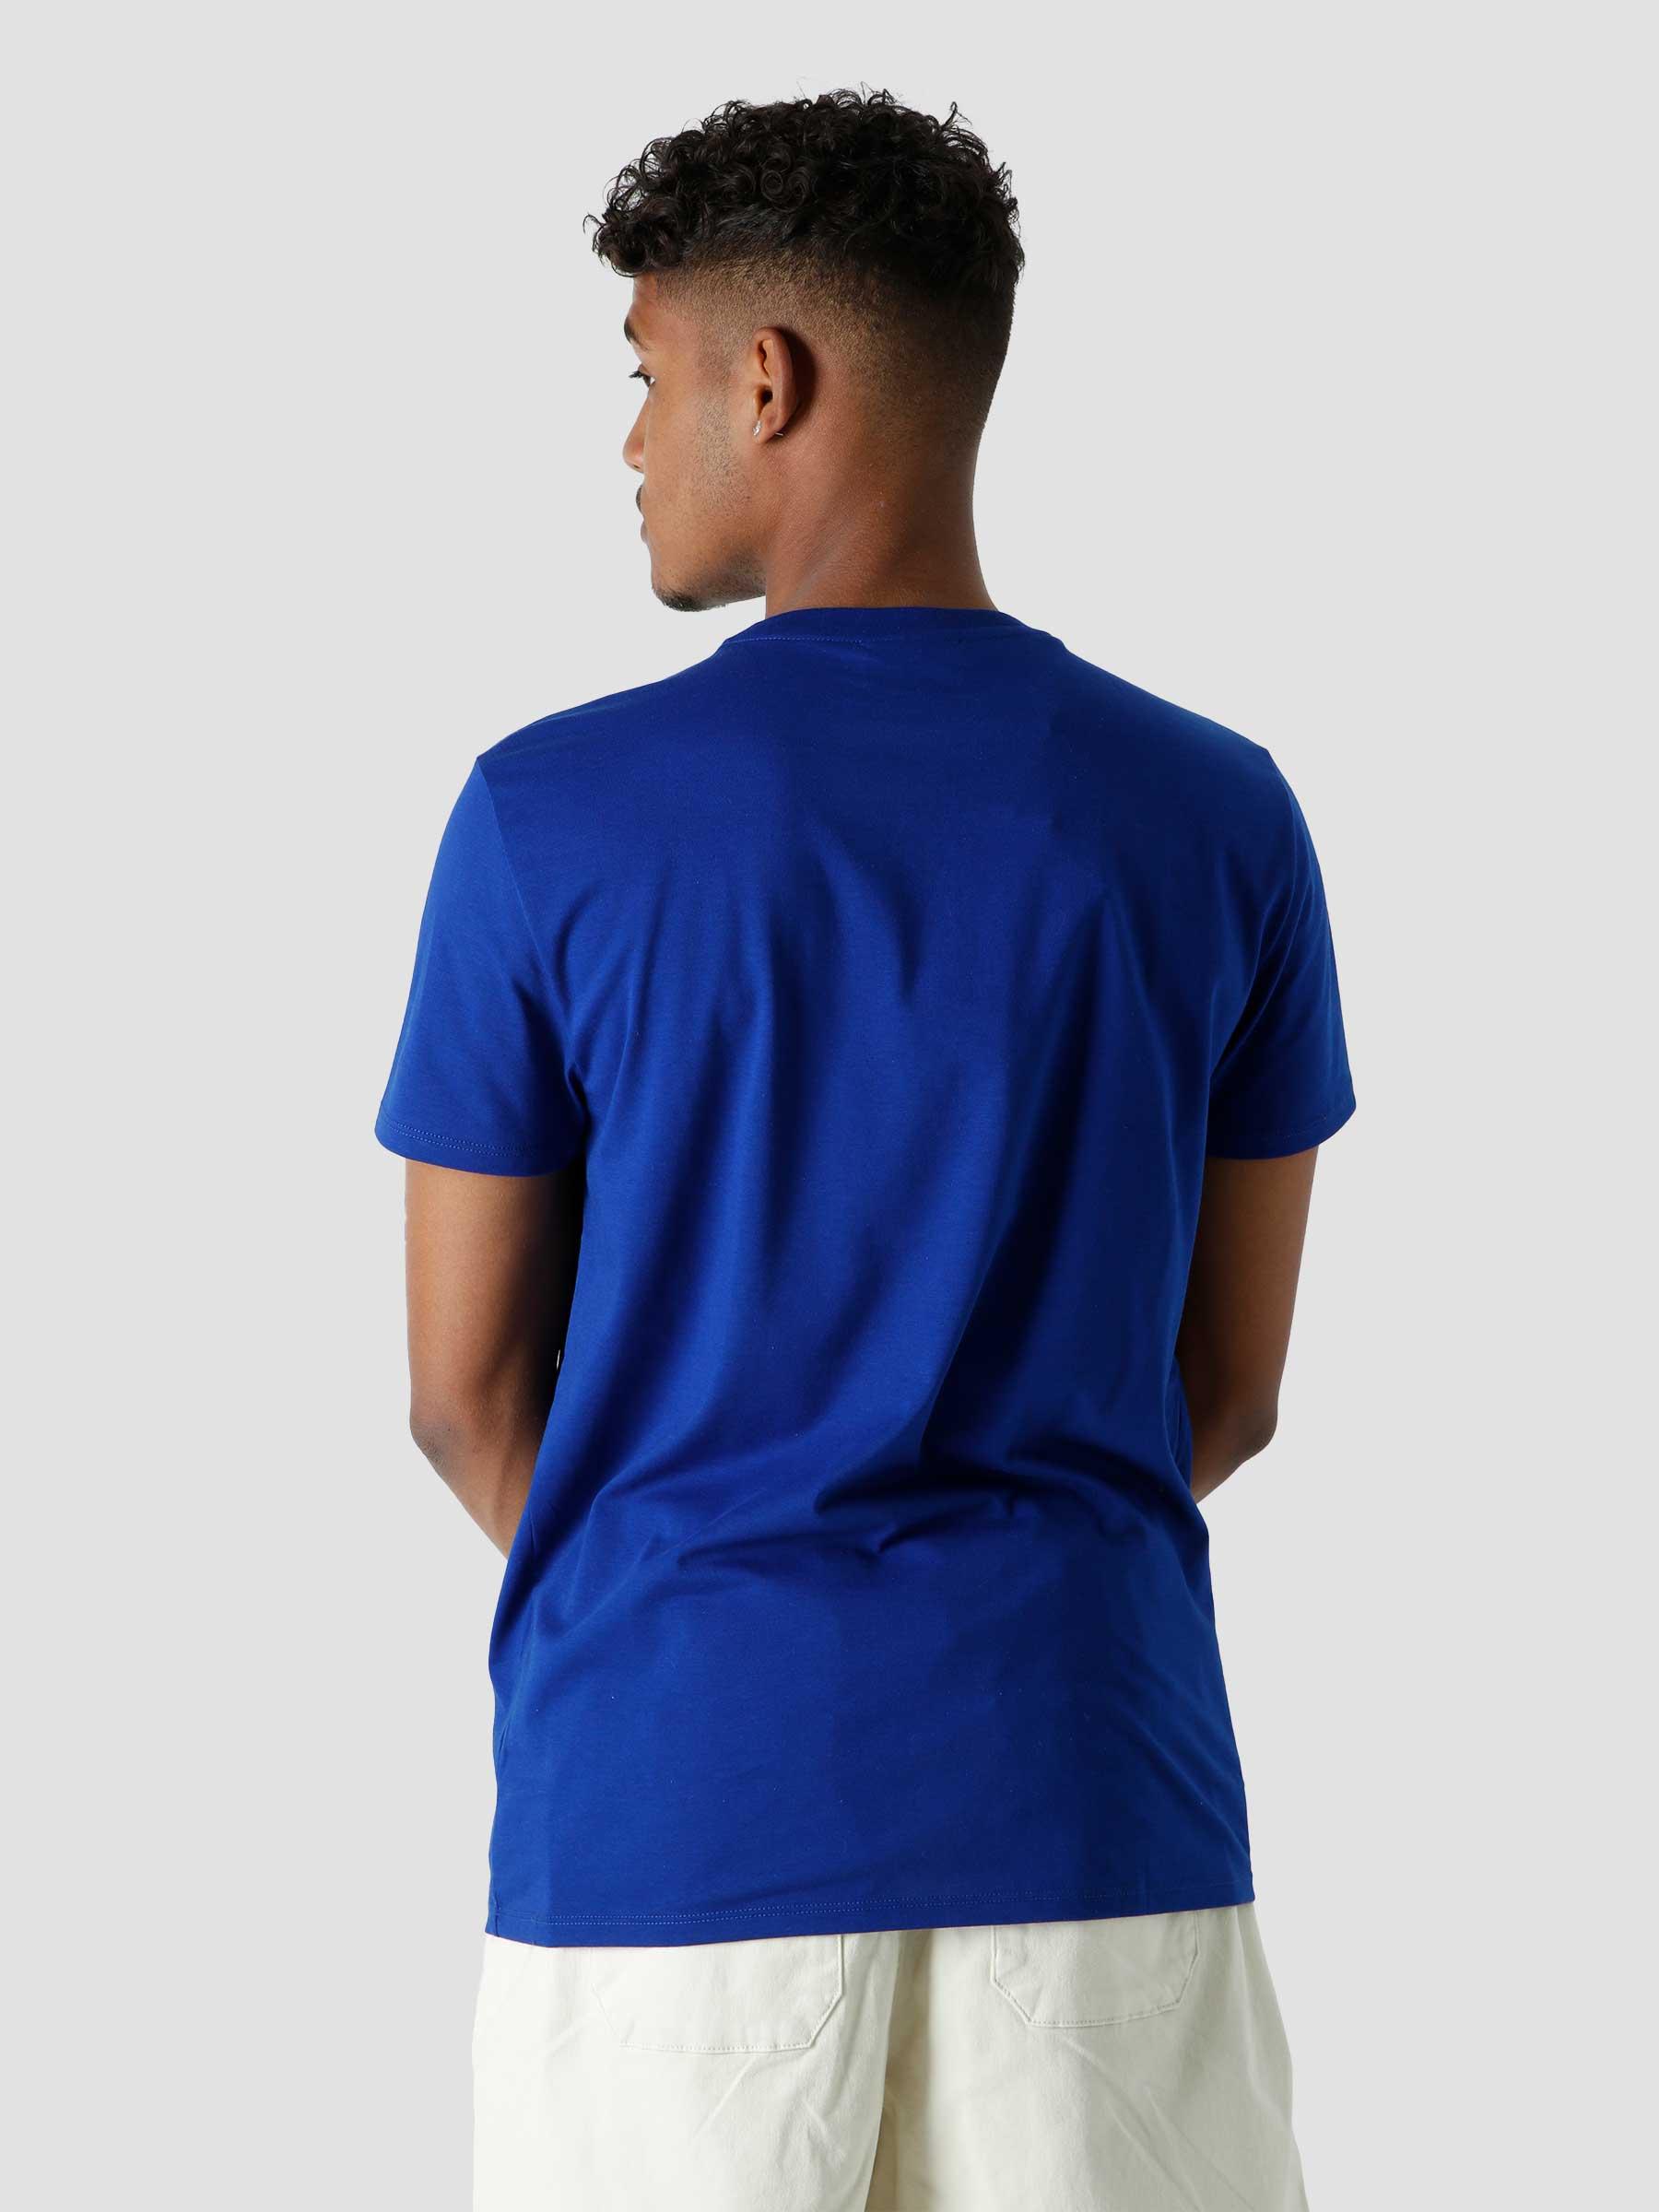 1HT1 Men's T-Shirt Blue TH6709-21